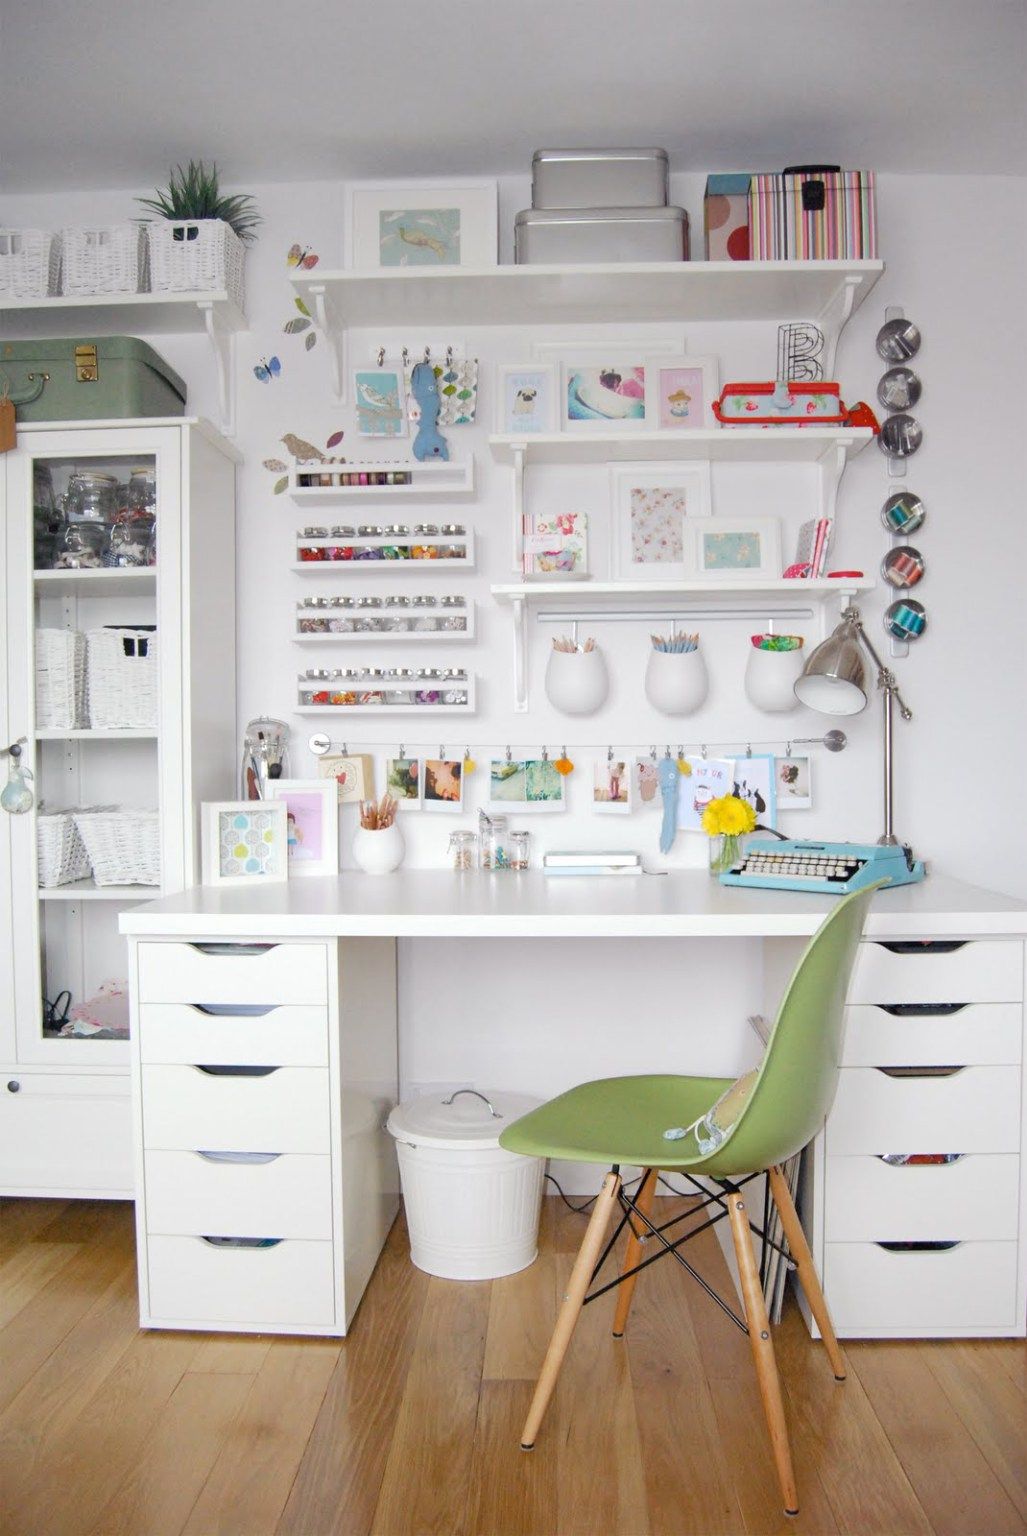 THe Absolute BEST IKEA Craft Room Ideas – the Original!